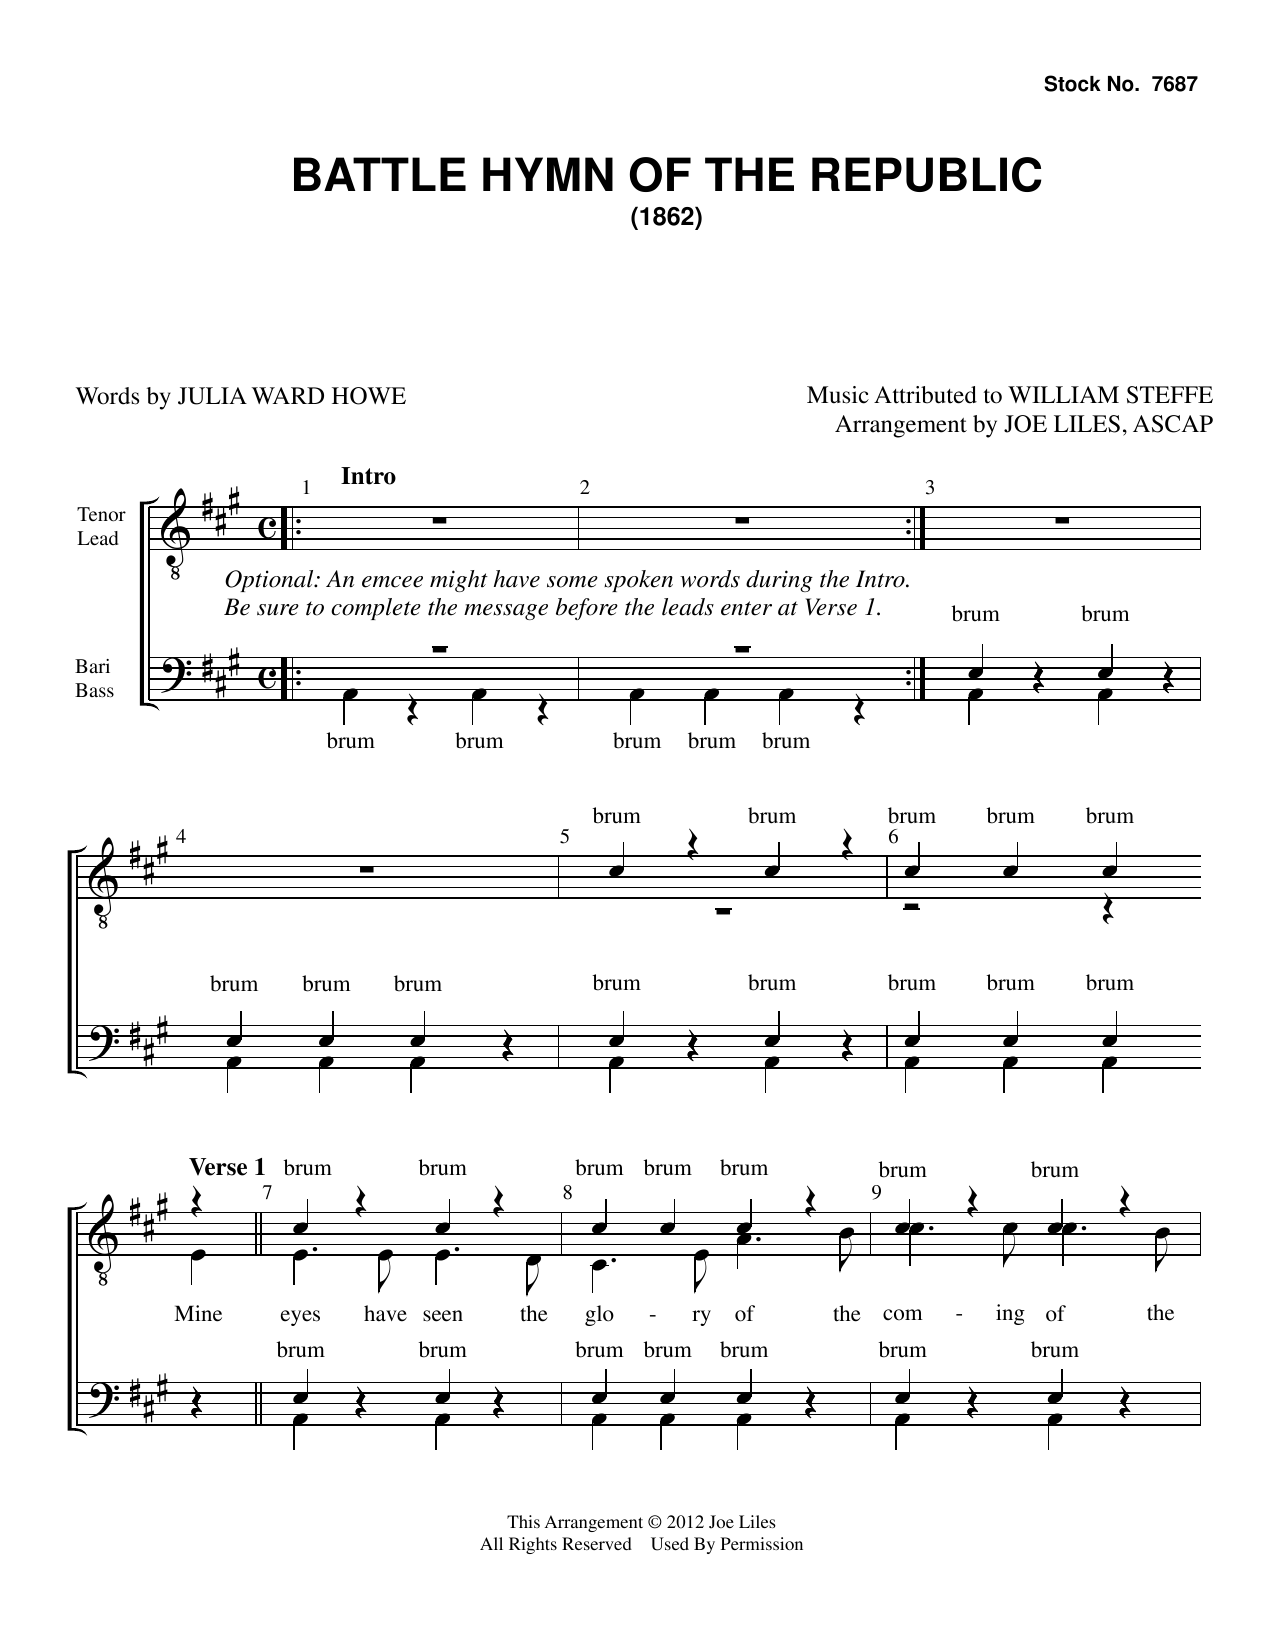 Julia Ward Howe The Battle Hymn of the Republic (arr. Joe Liles) Sheet Music Notes & Chords for TTBB Choir - Download or Print PDF